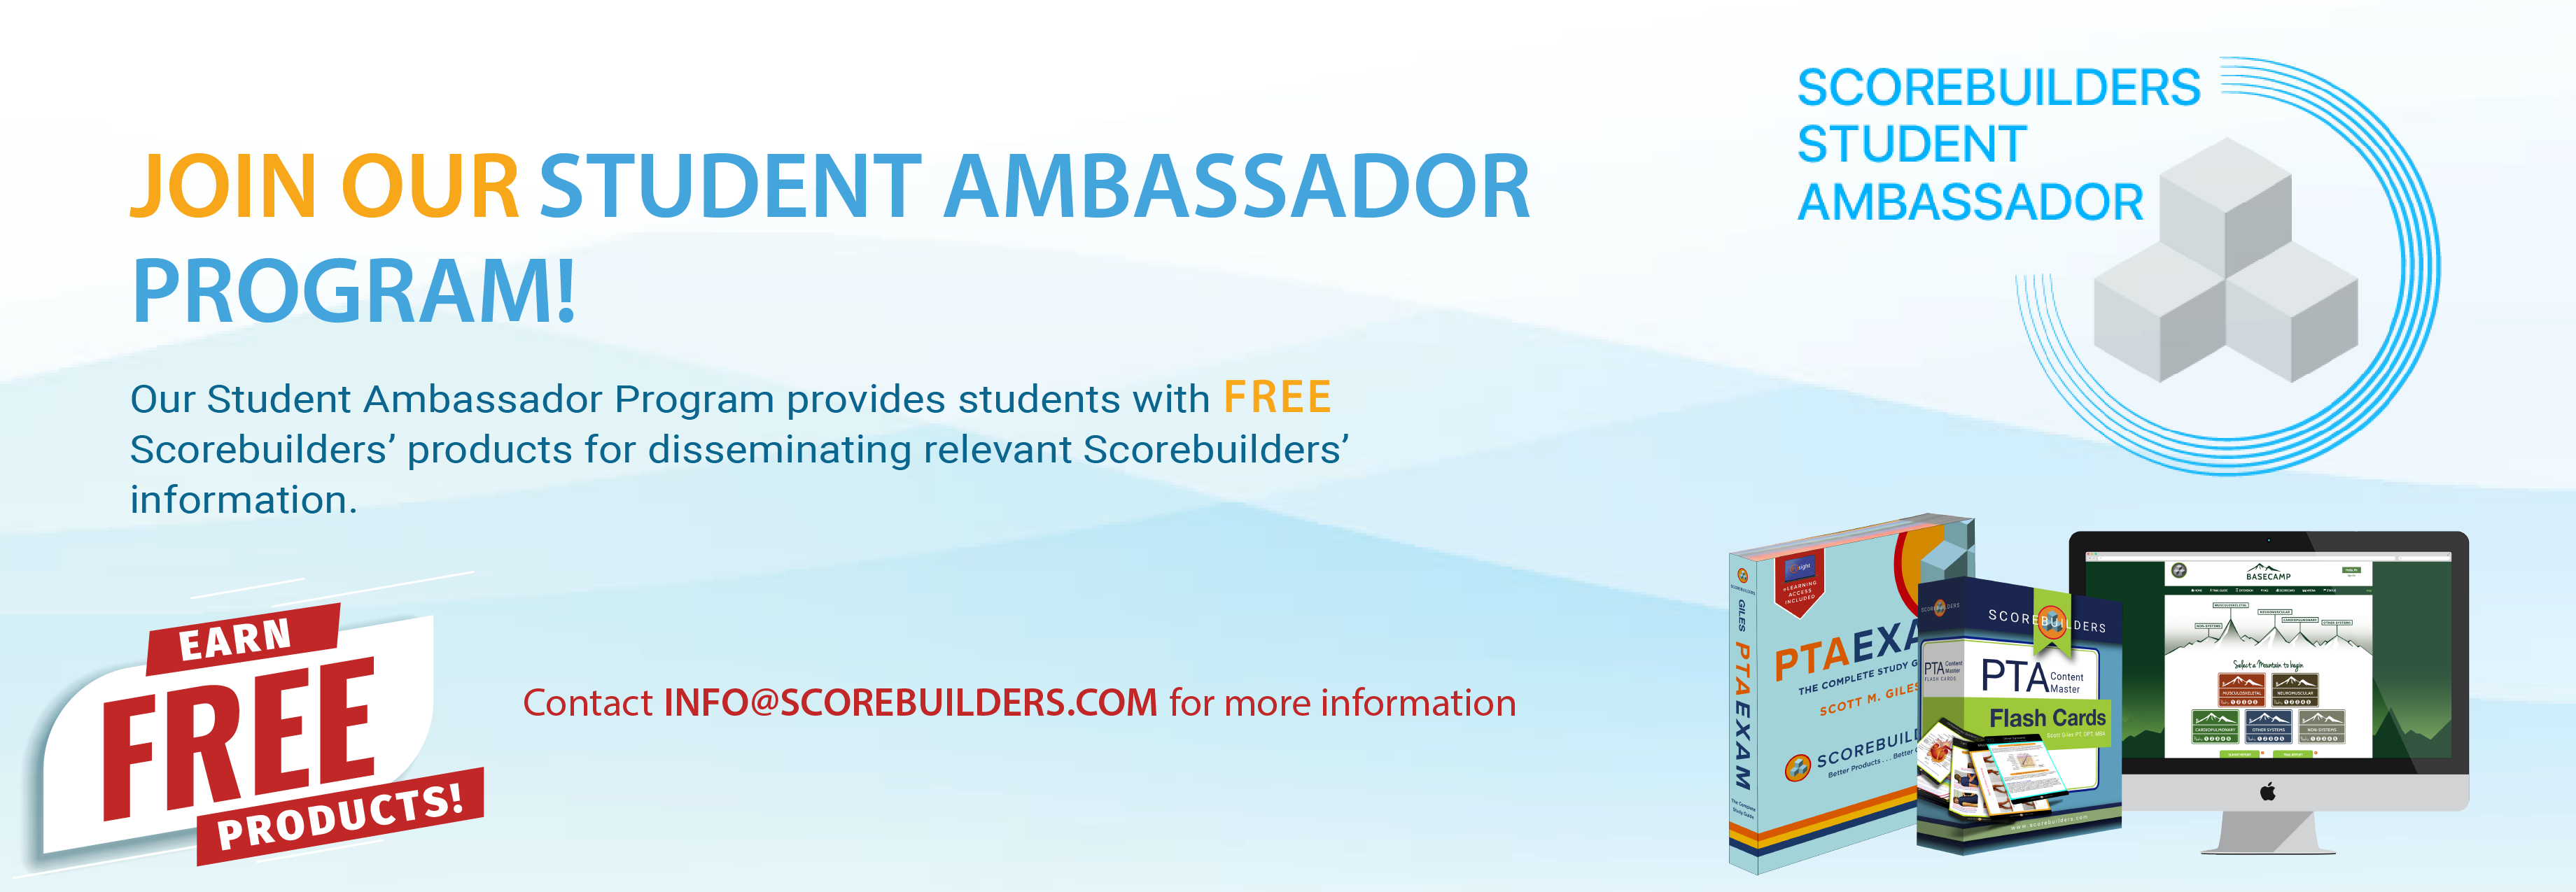 imagery for PTA student ambassador program